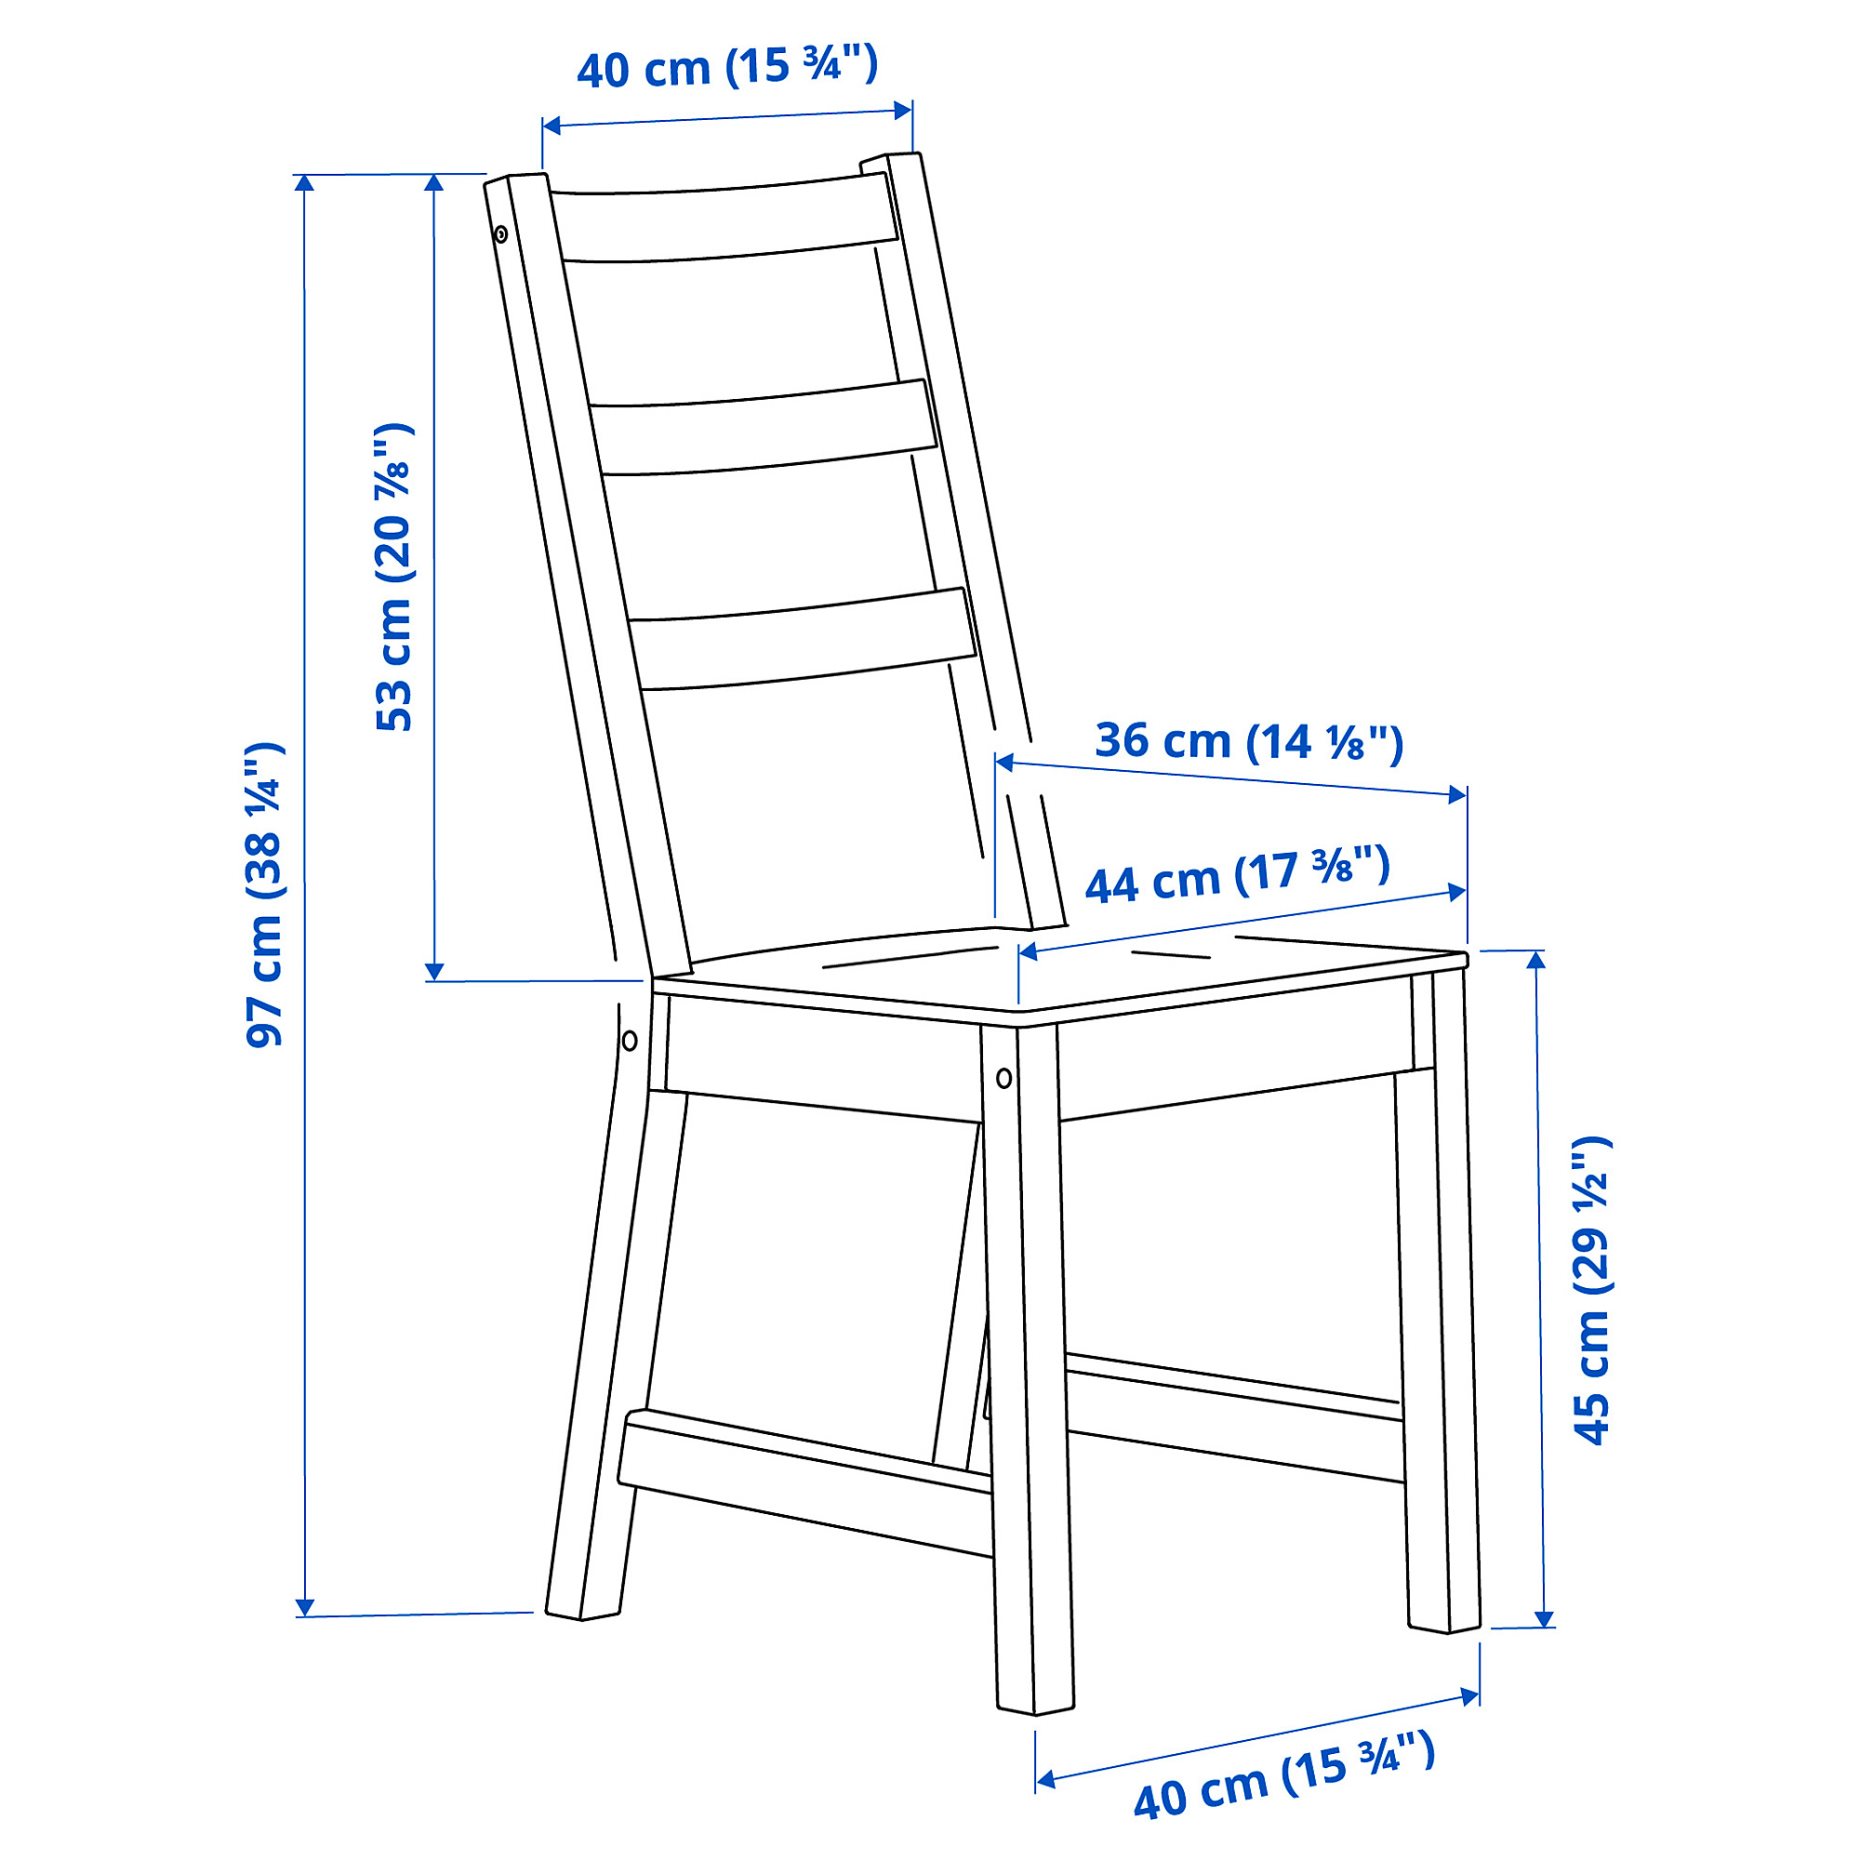 NORDVIKEN/NORDV, τραπέζι και 4 καρέκλες, 152/223x95 cm, 393.866.47